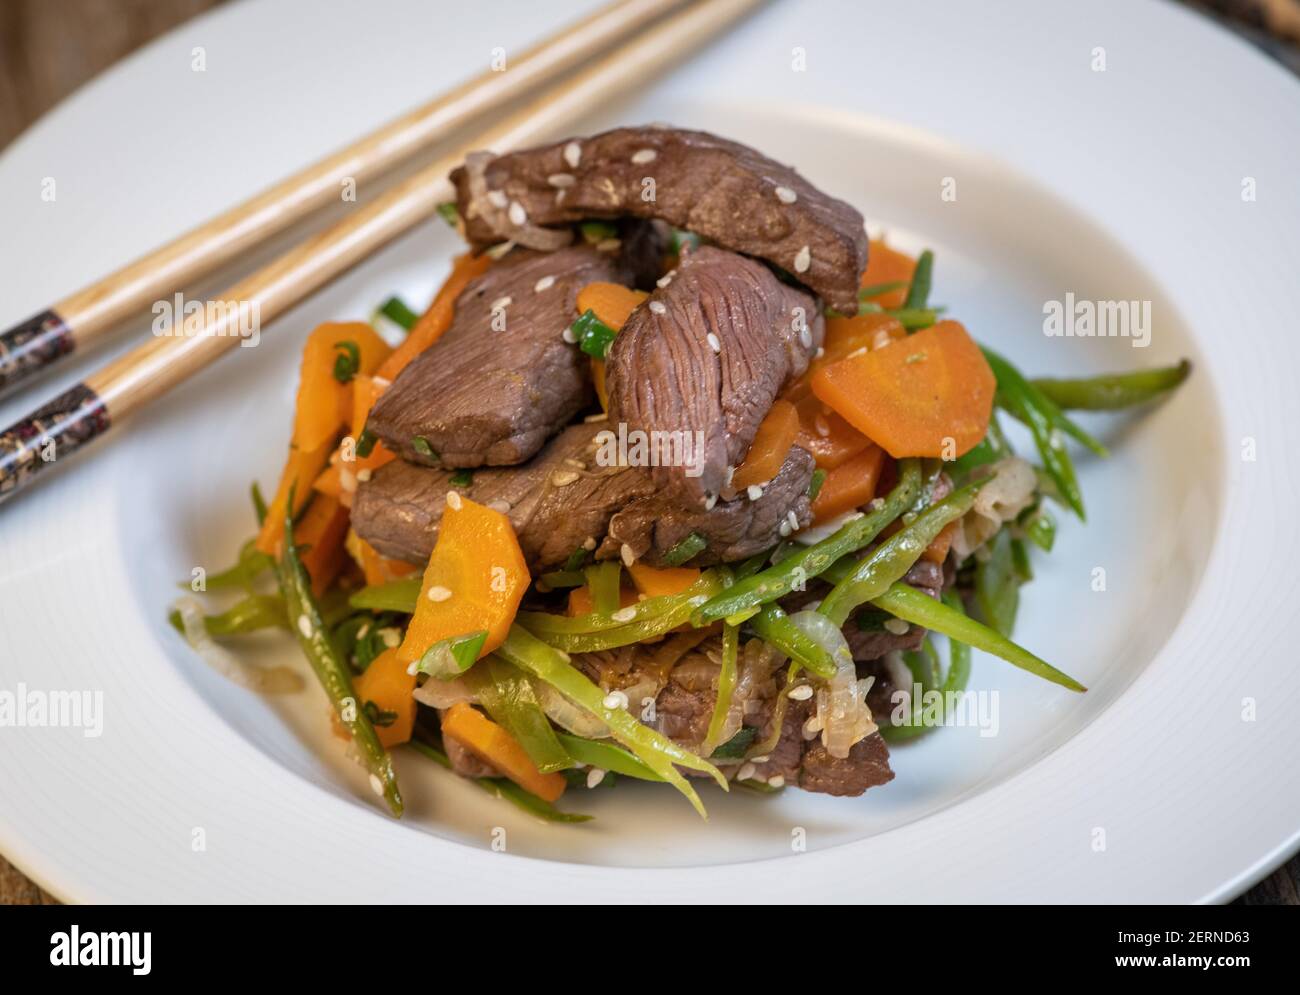 Receta Sésamo carne wok, verduras de verano picadas Fotografía de stock -  Alamy